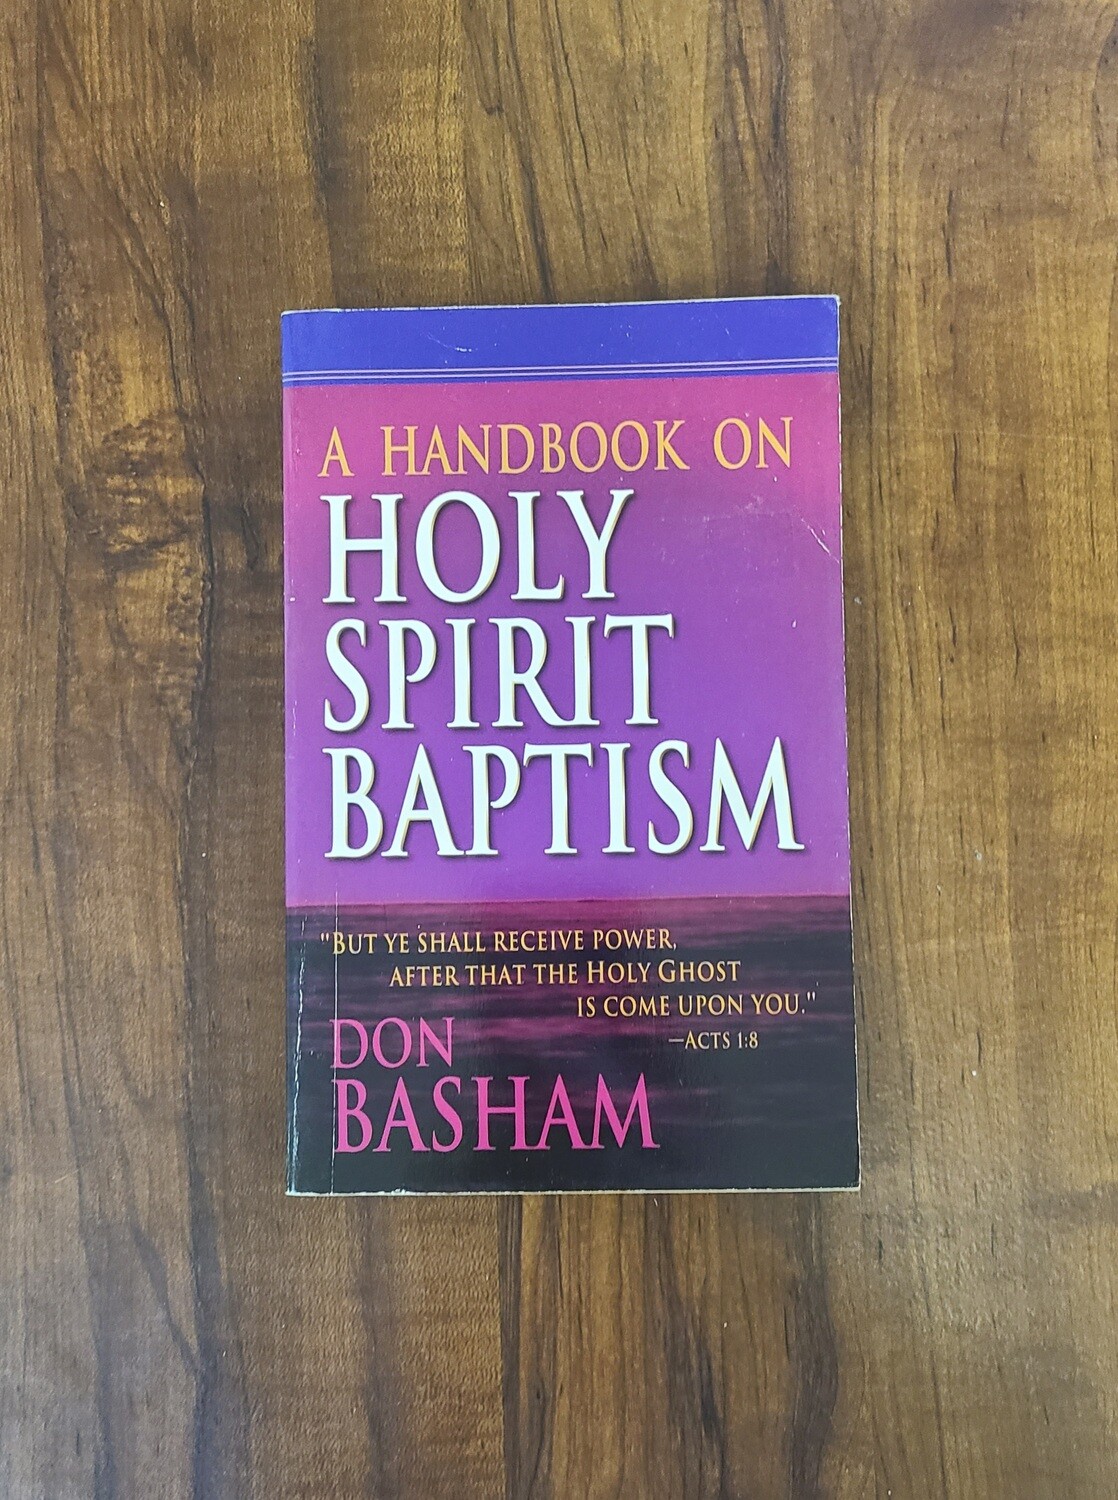 A Handbook on Holy Spirit Baptism by Don Basham